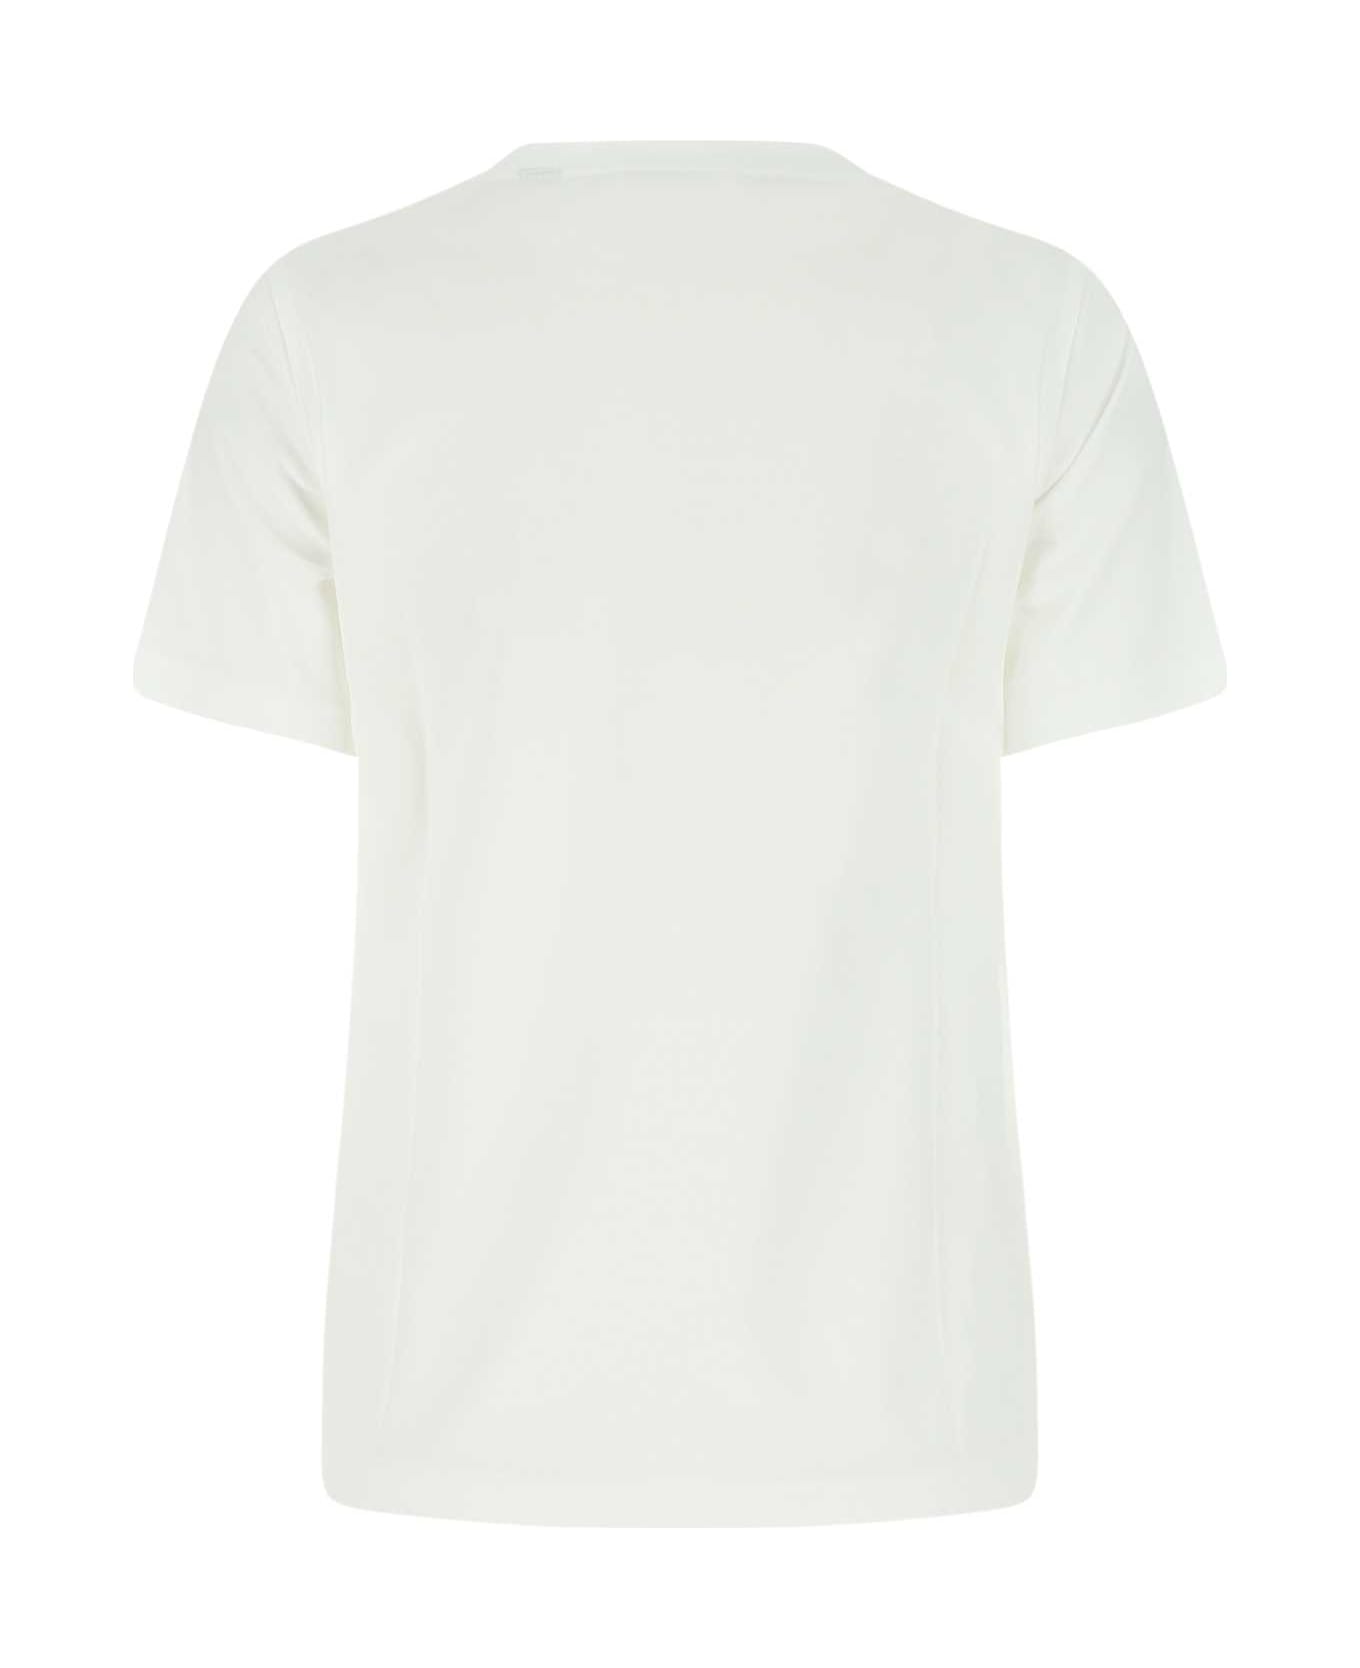 Burberry White Cotton T-shirt - A1464